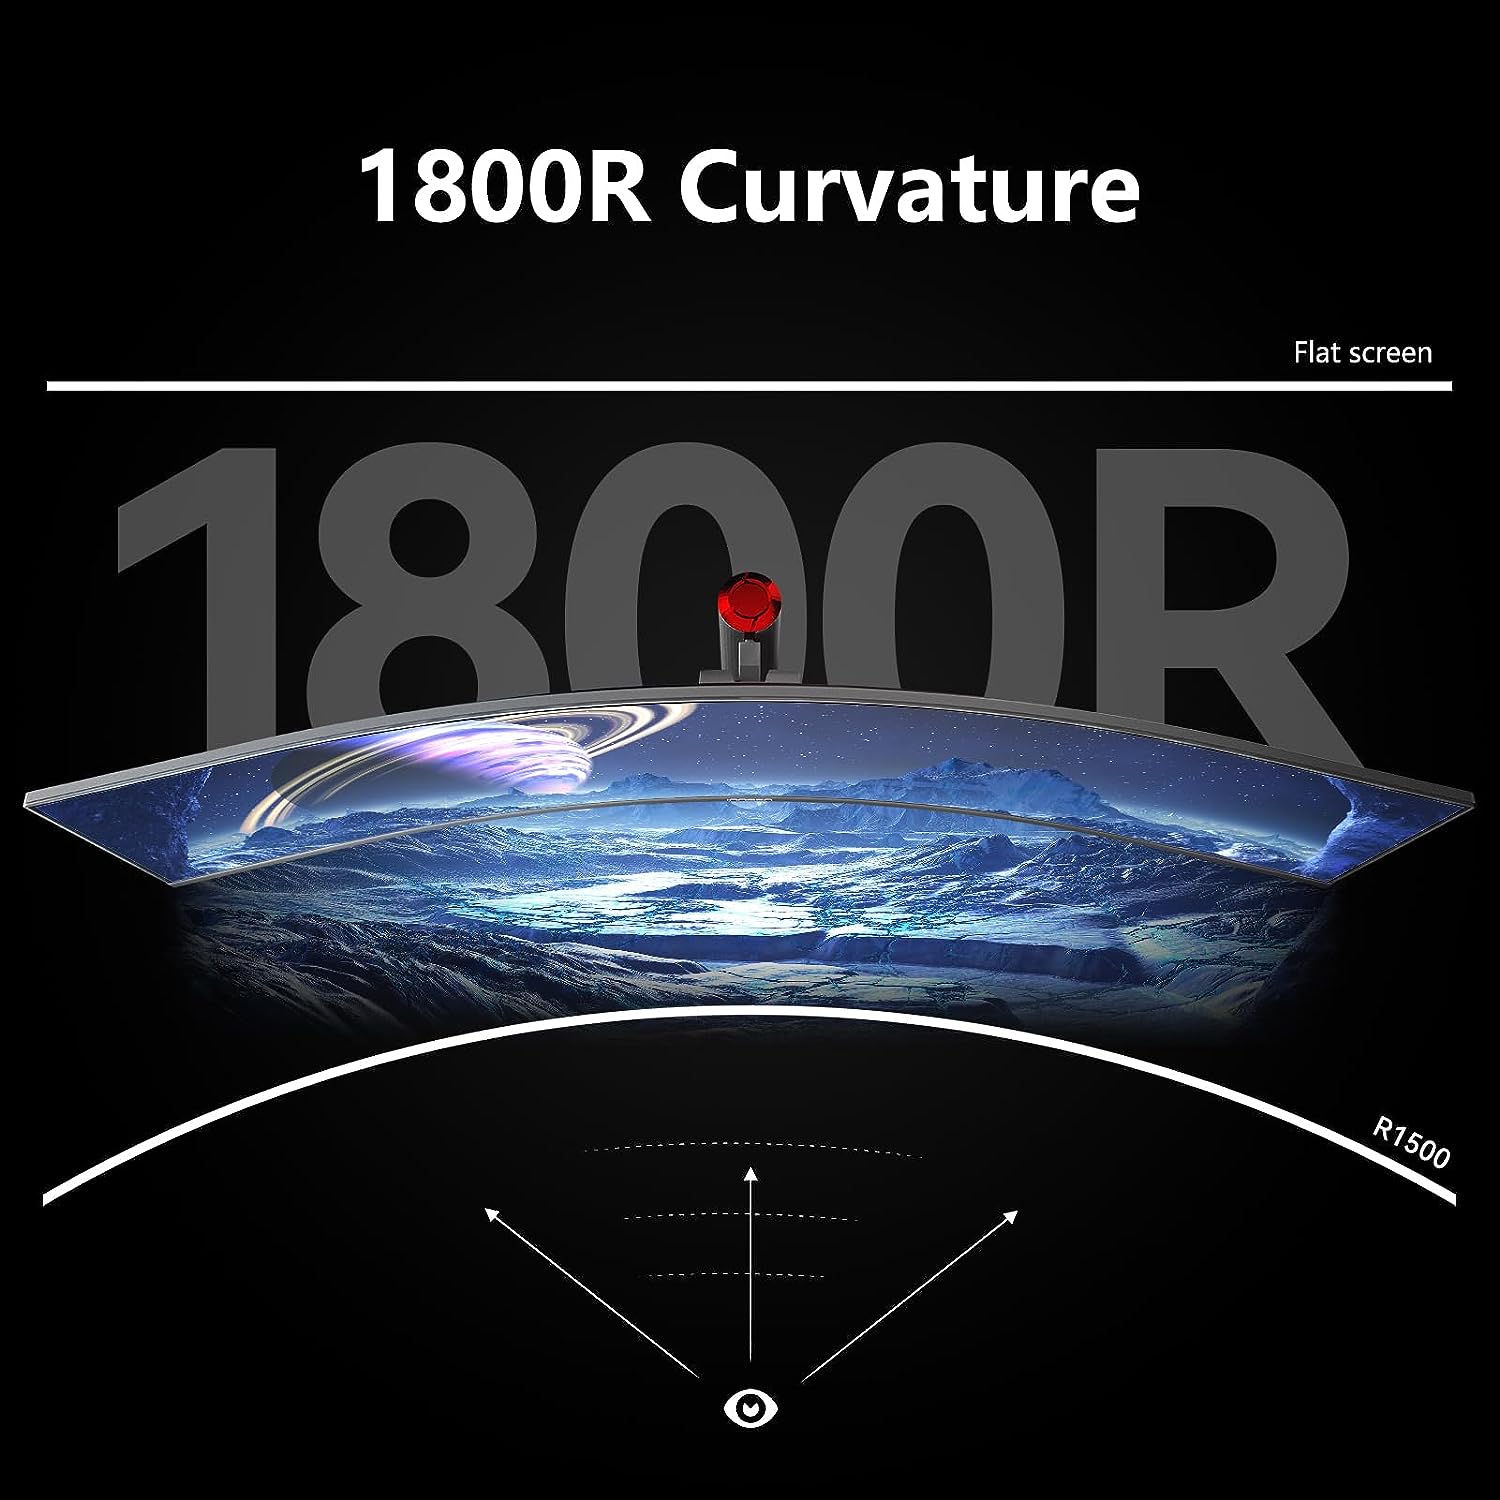 INNOCN 49 Ultrawide 5K Curved Gaming Monitor - 49C1R